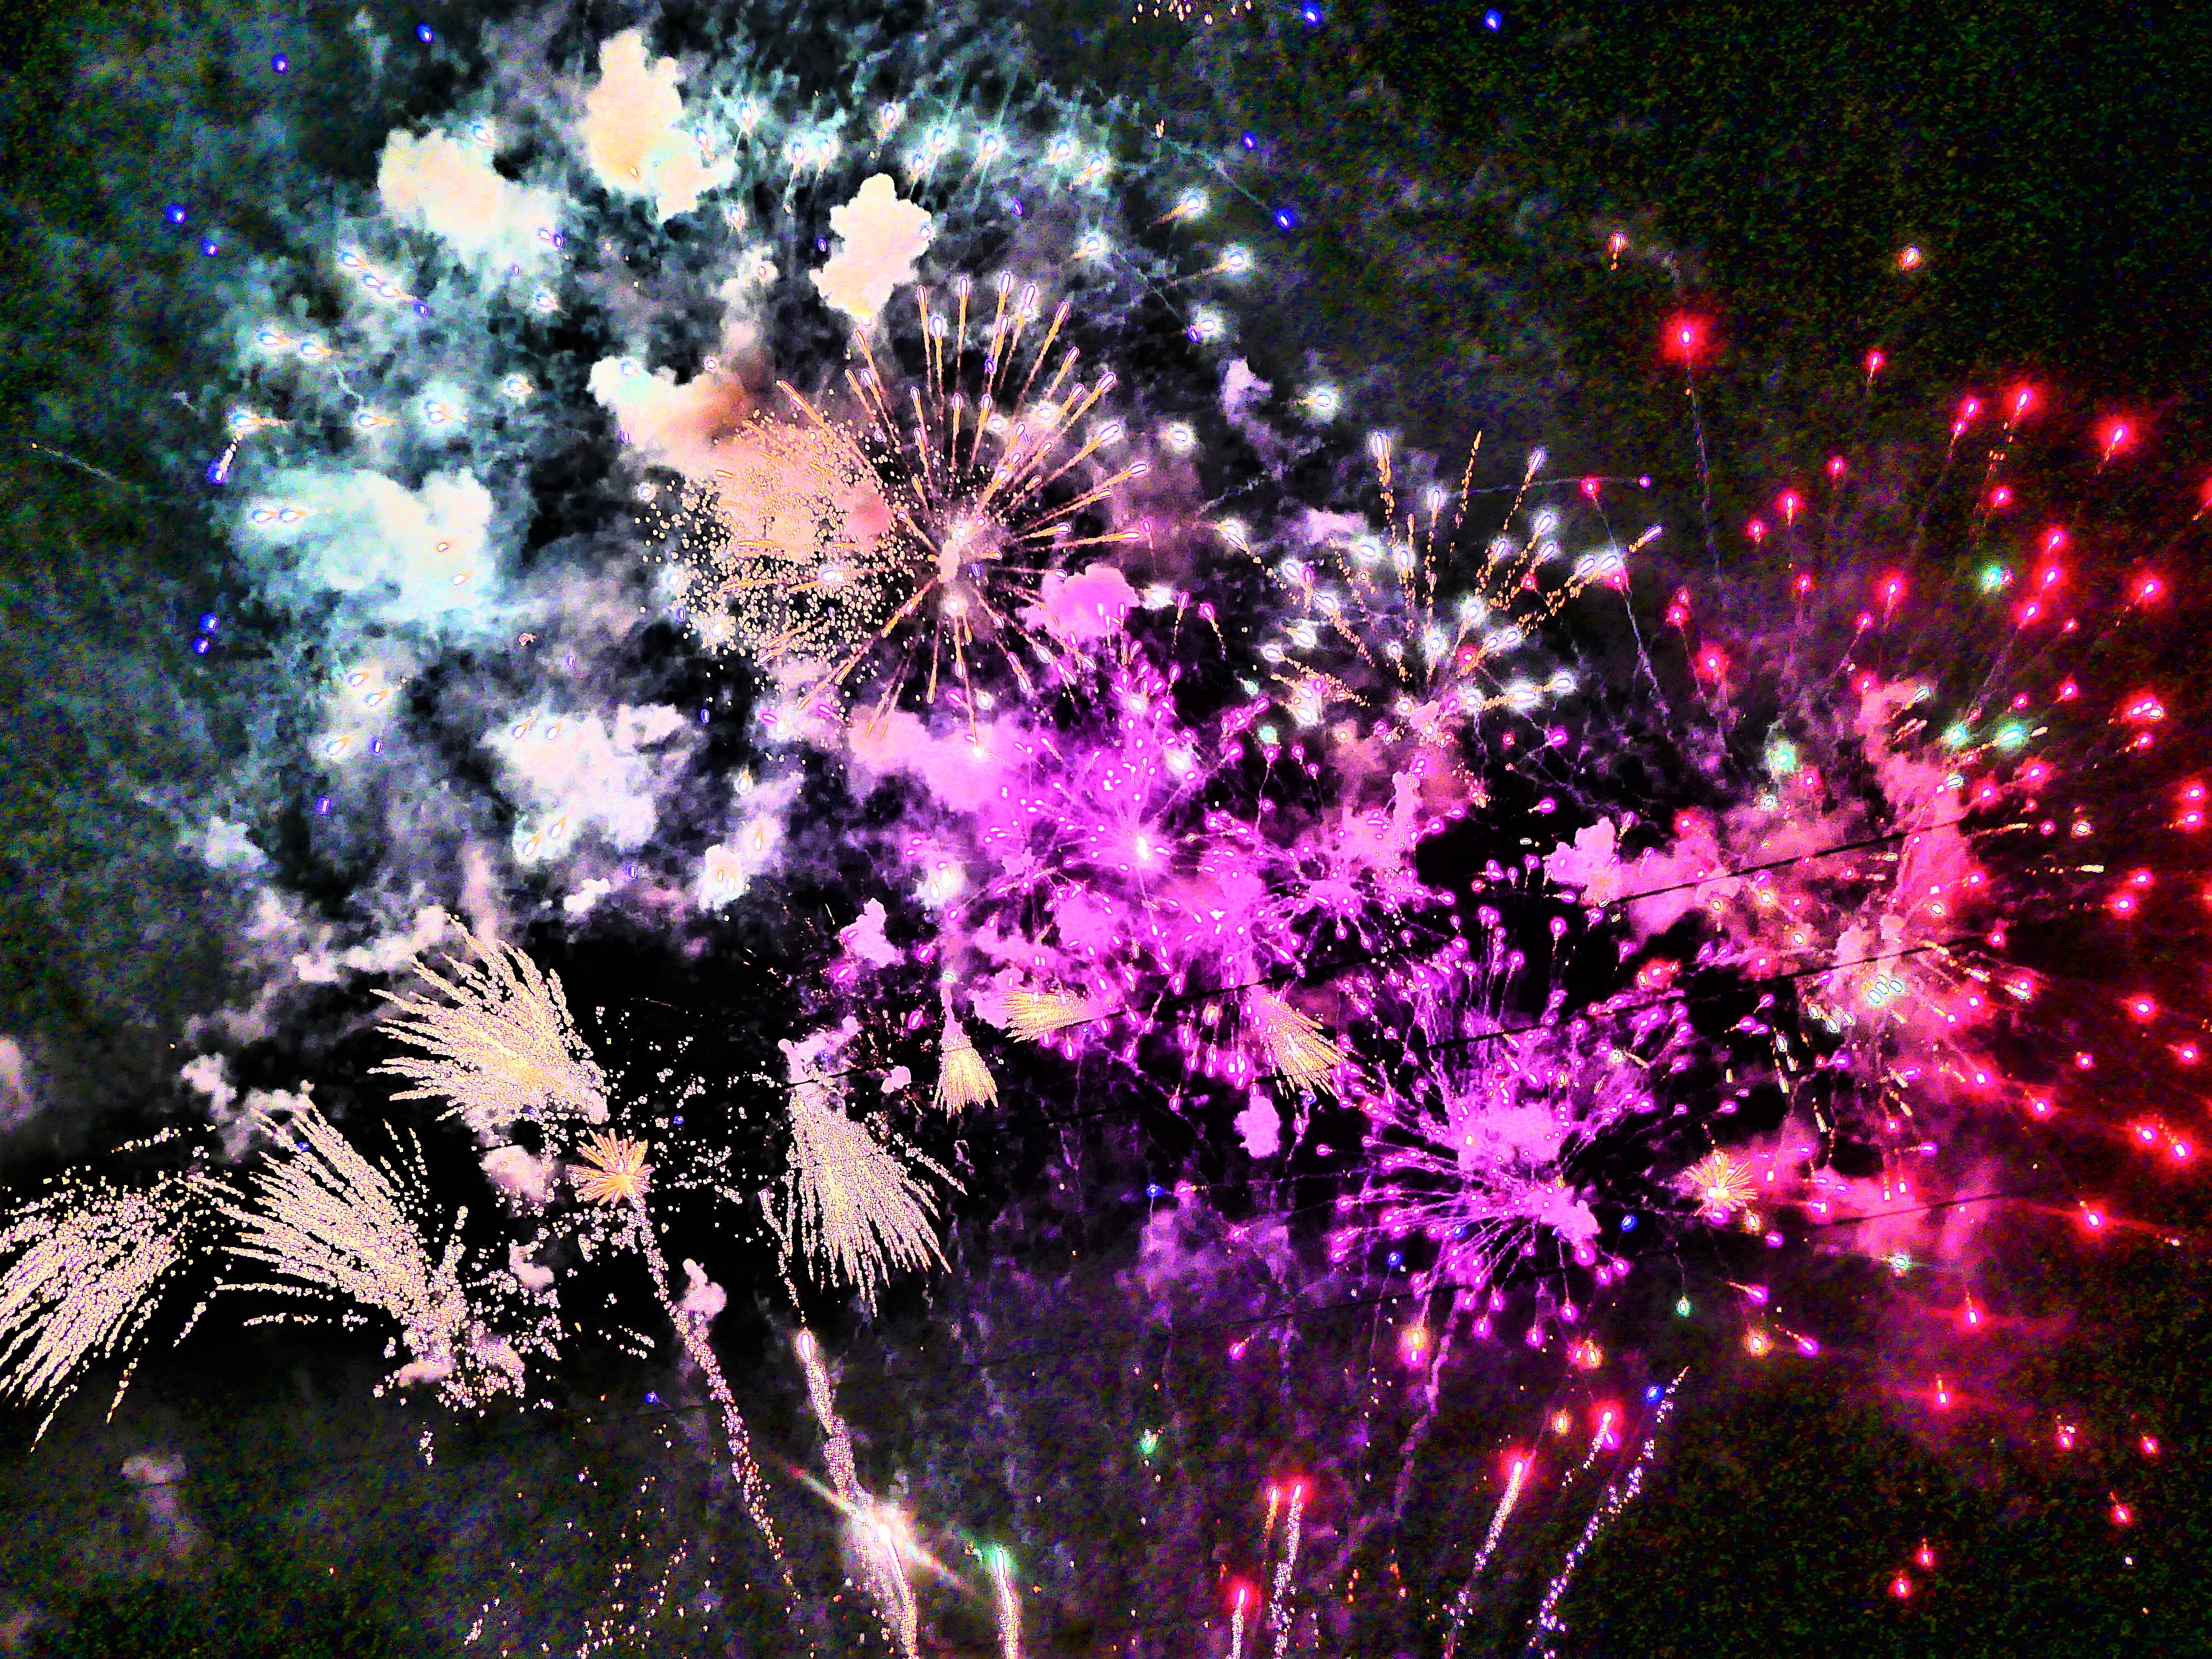 fireworks4